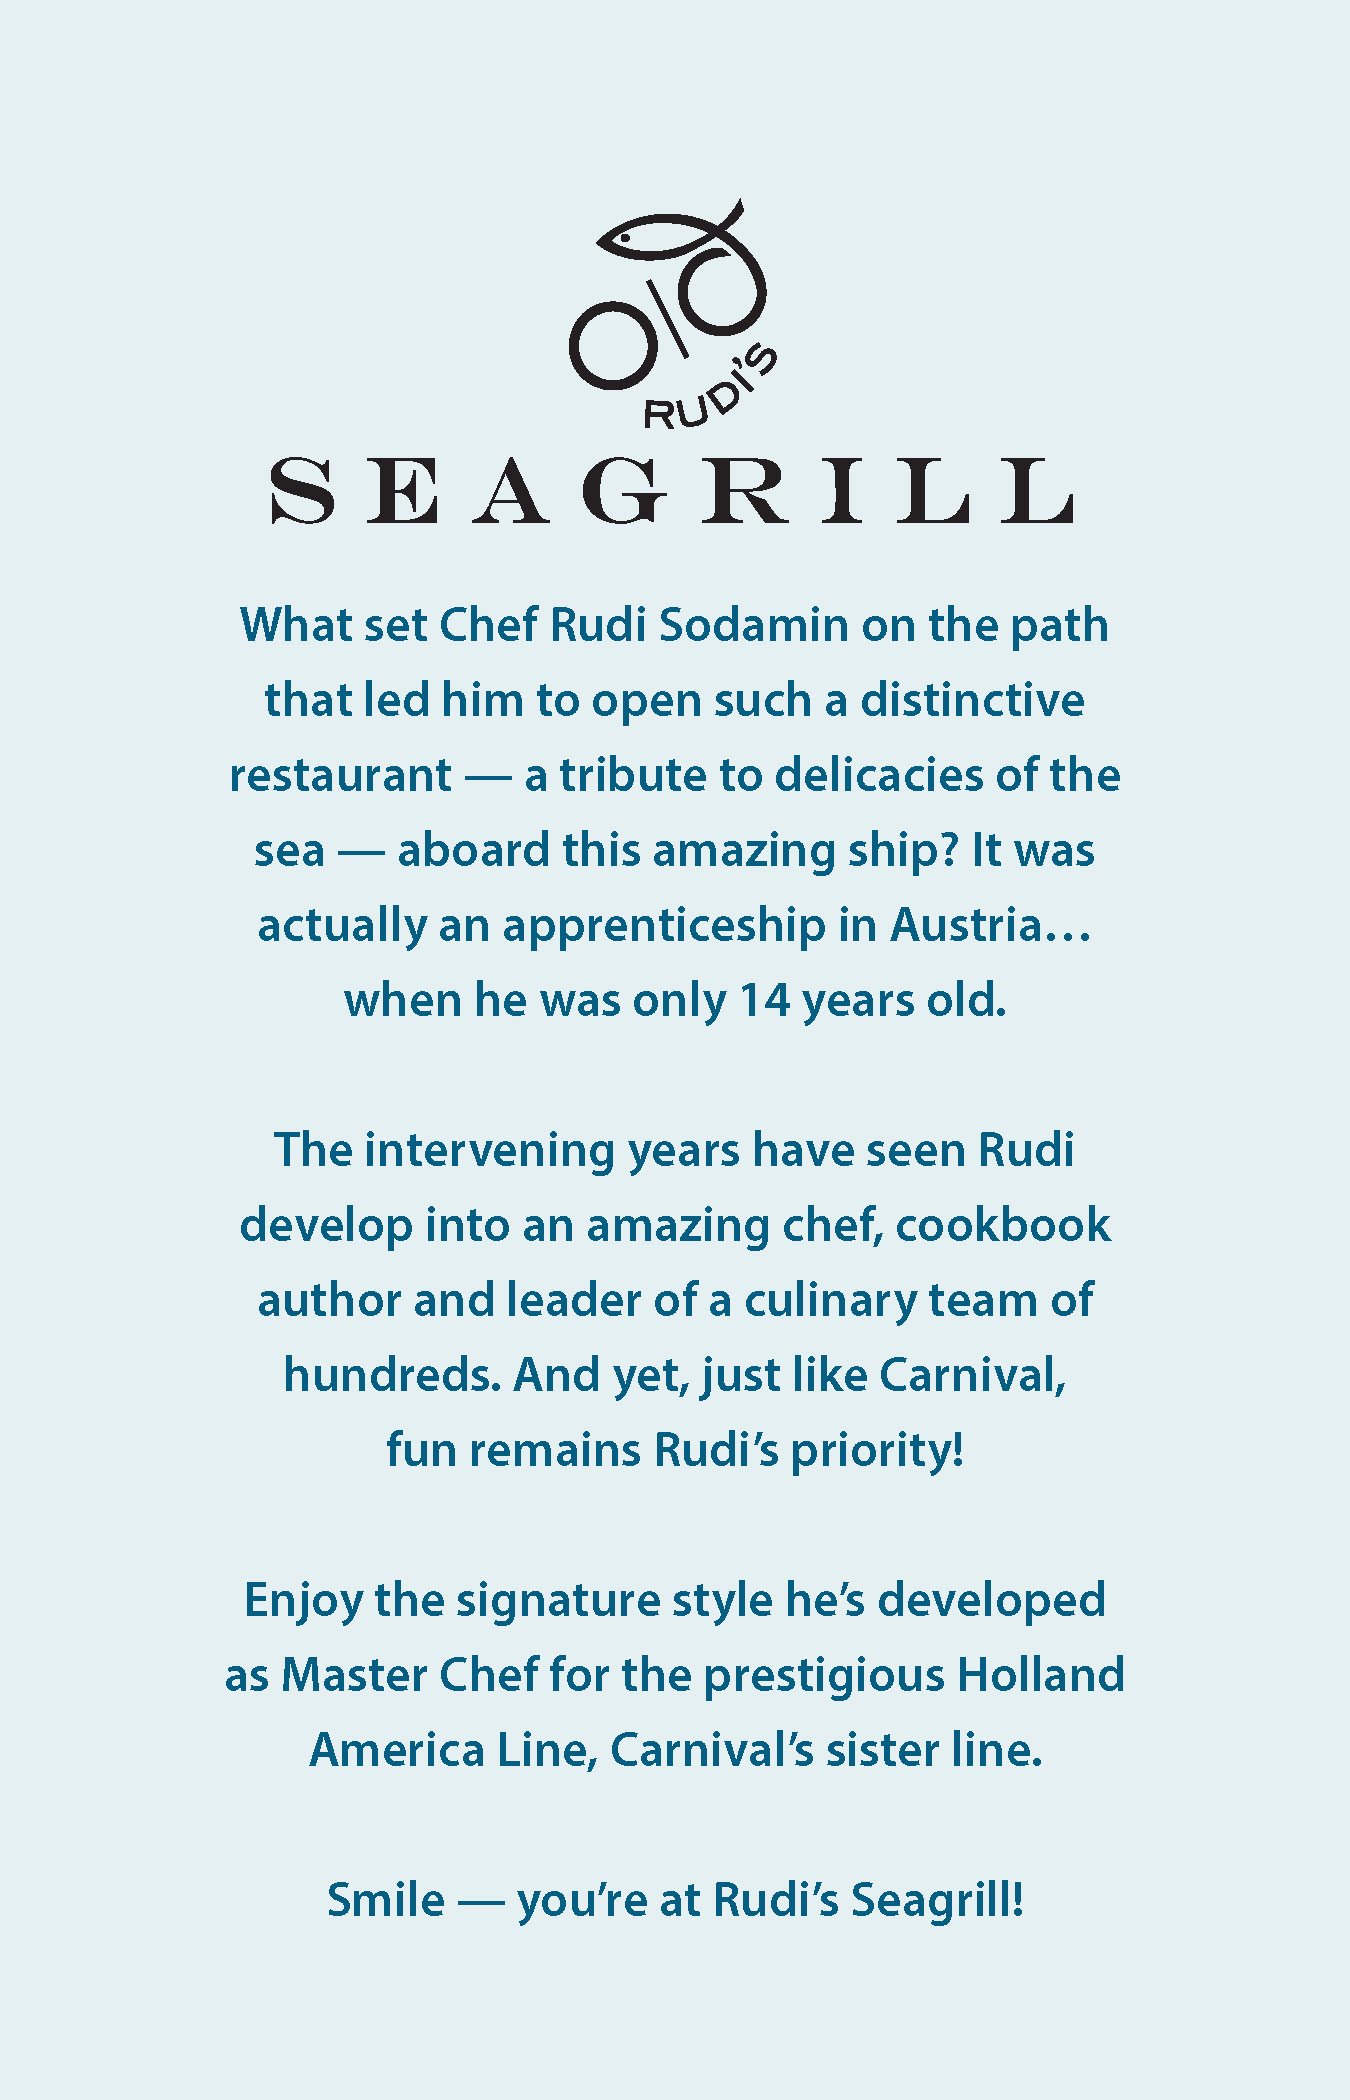 rudis-seagrill-menu_Page_1.jpg